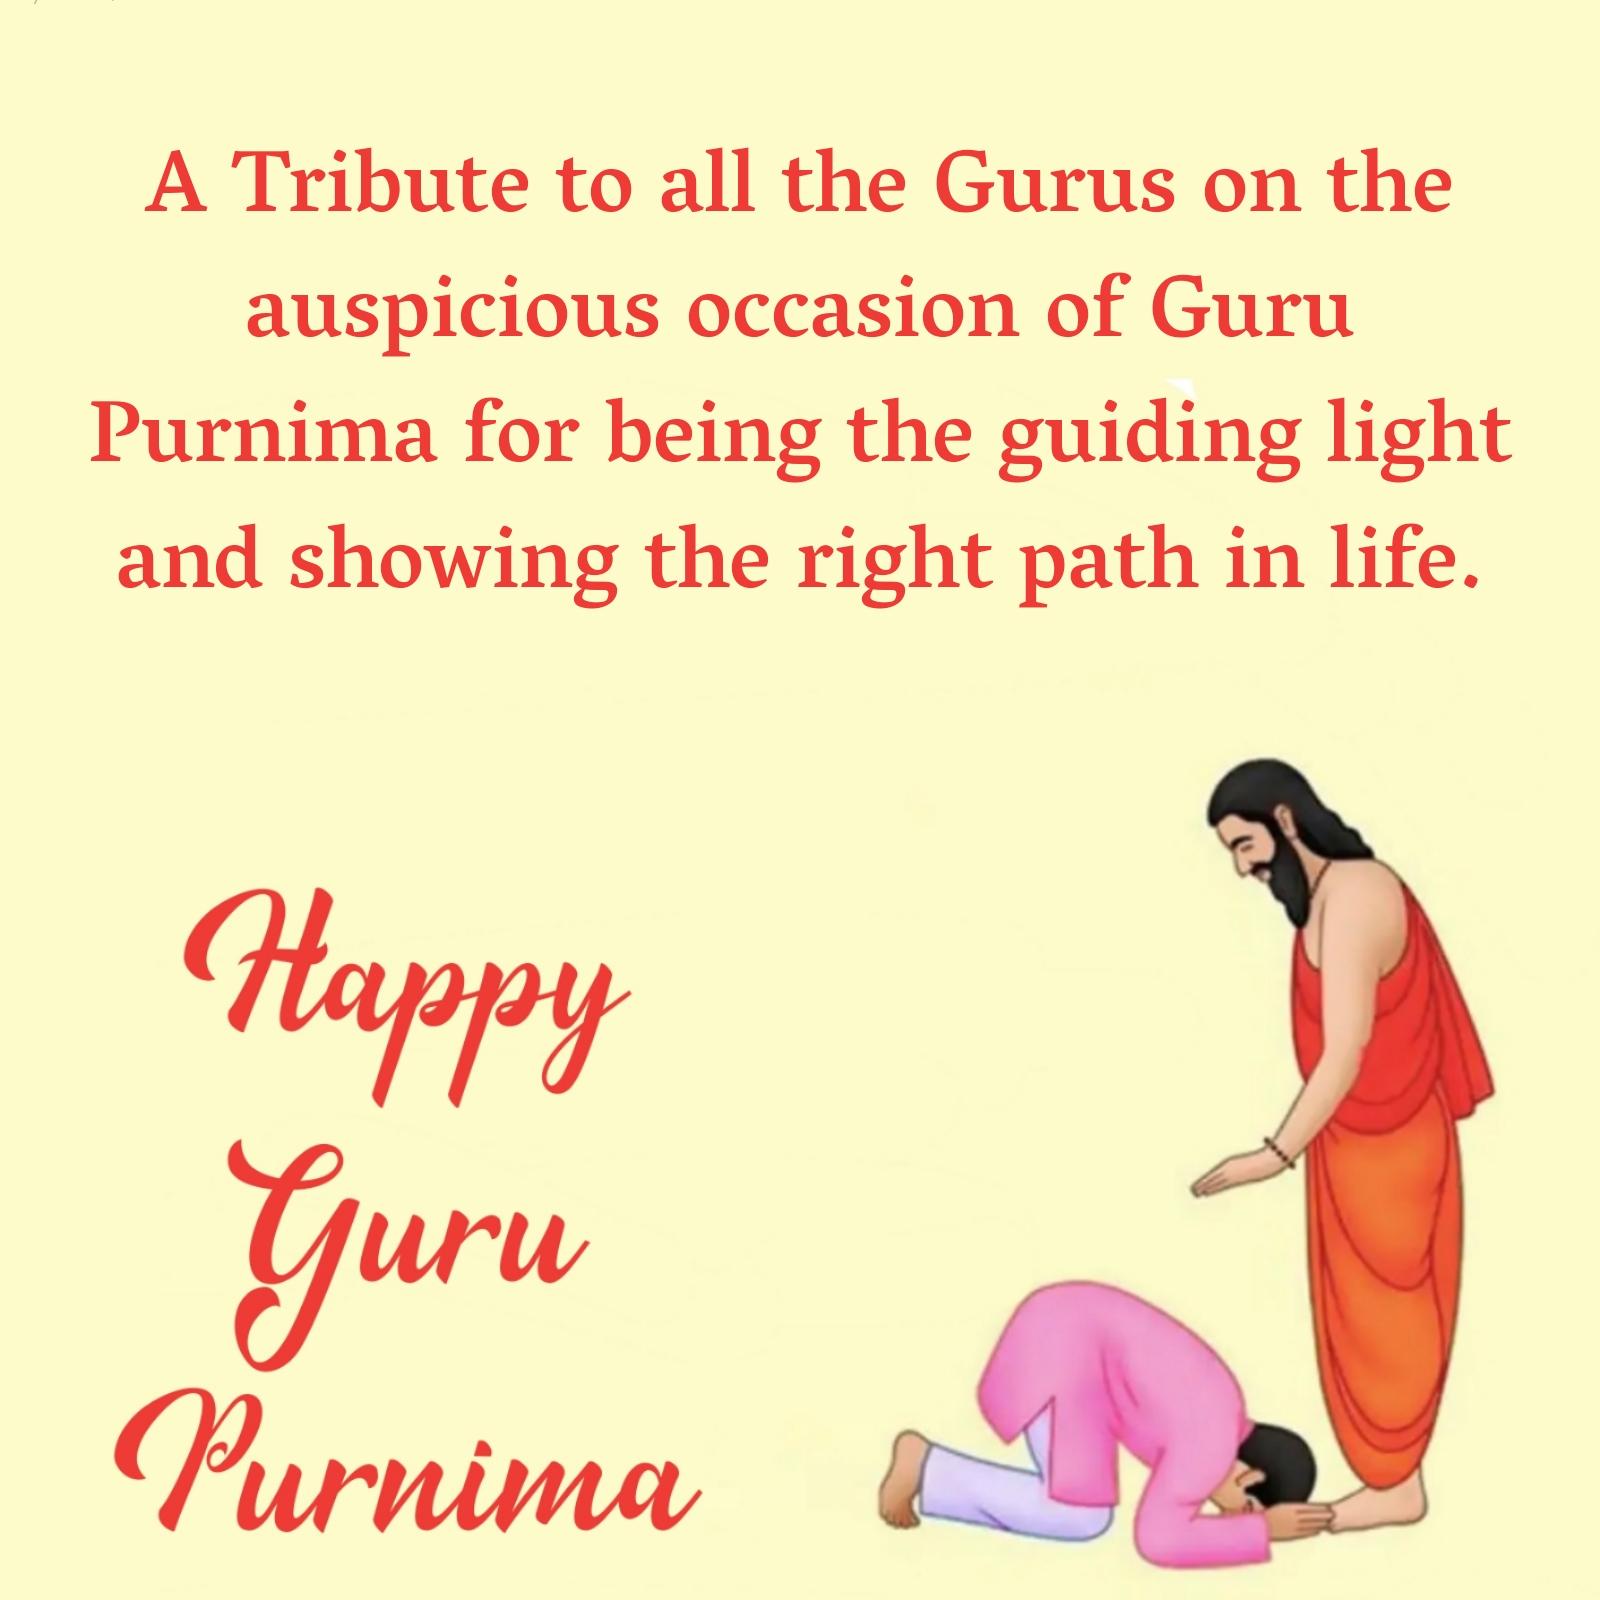 A Tribute to all the Gurus on the auspicious occasion of Guru Purnima